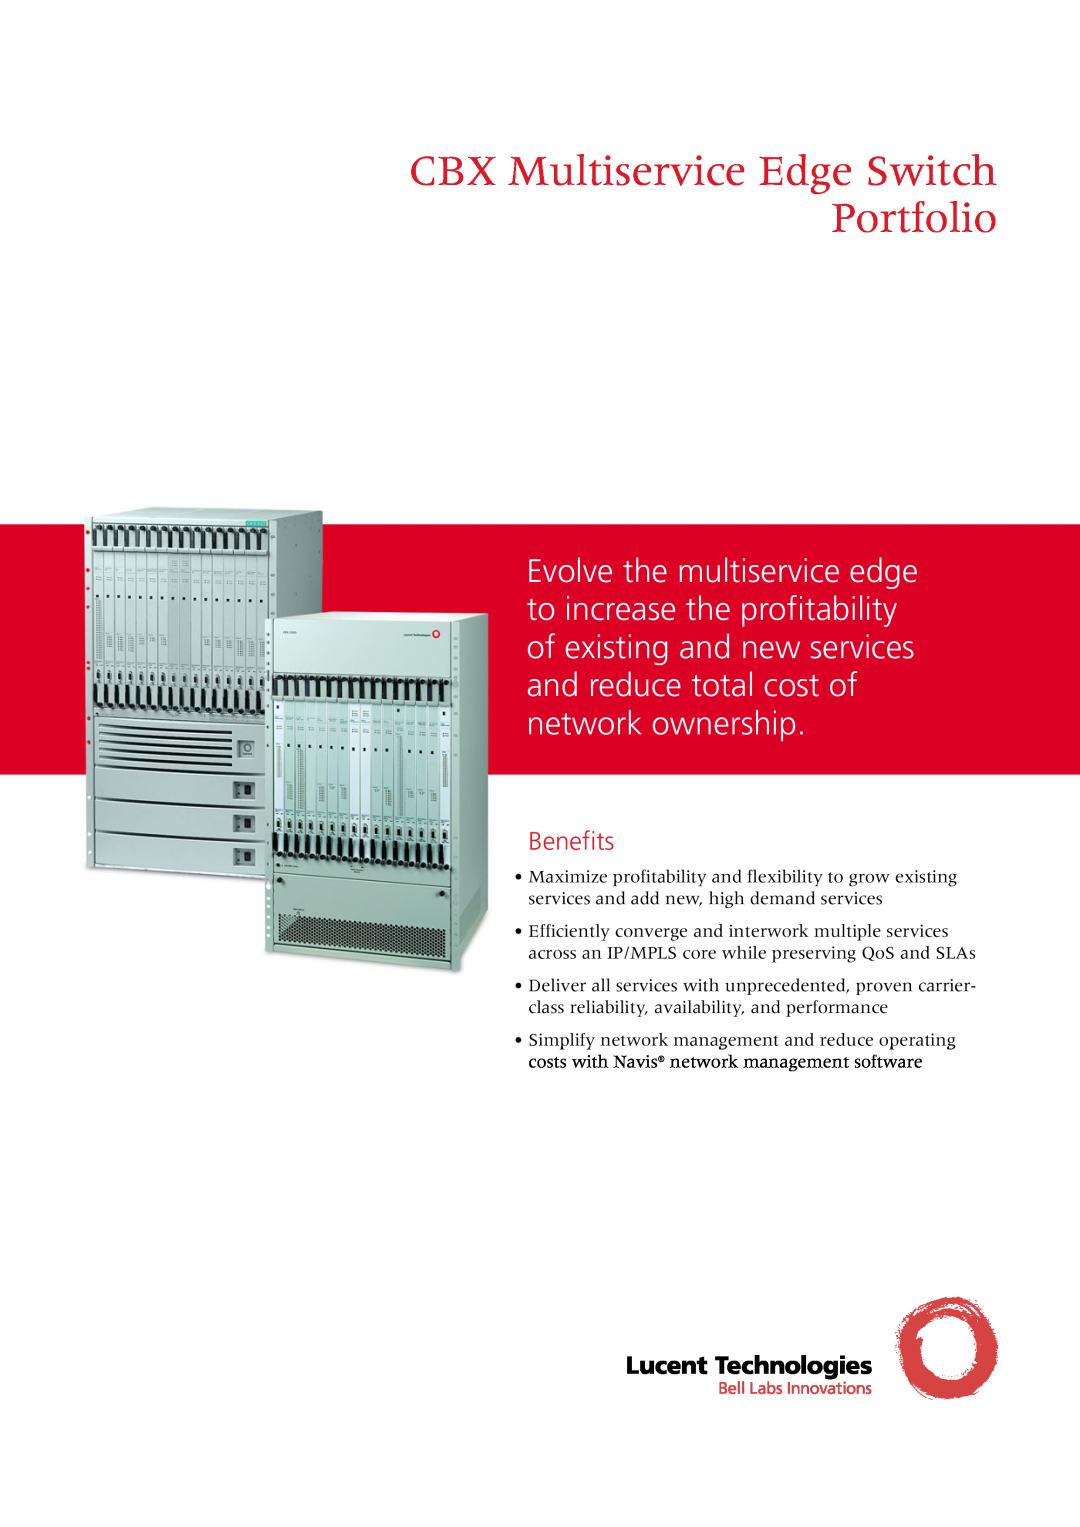 Lucent Technologies manual CBX Multiservice Edge Switch Portfolio, Benefits 